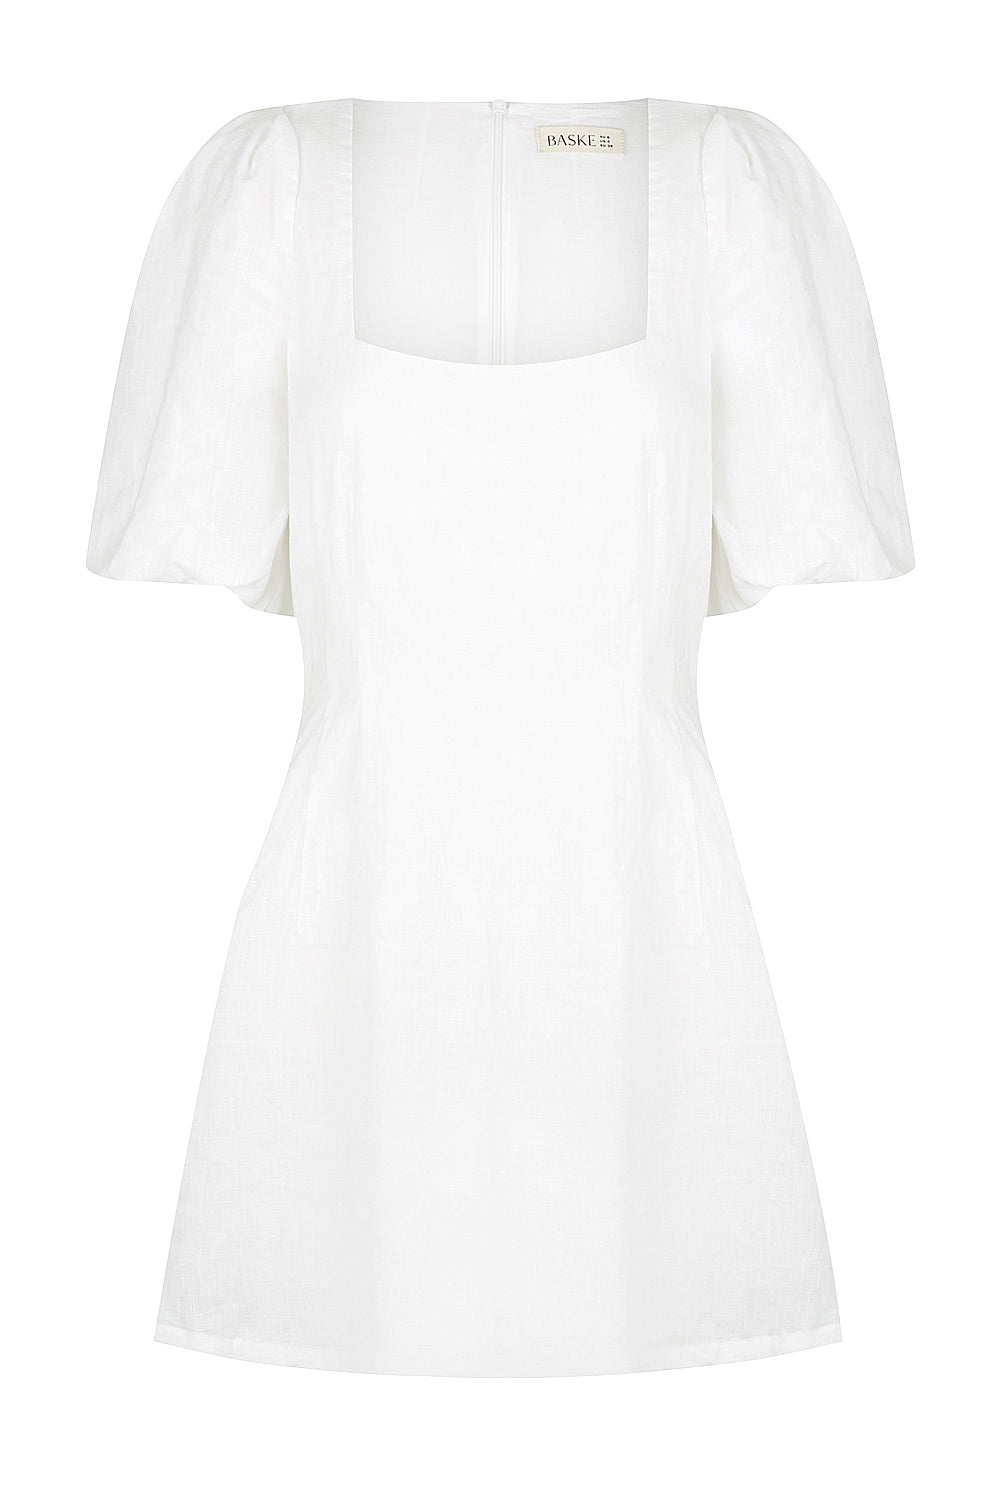 Nelson Dress White